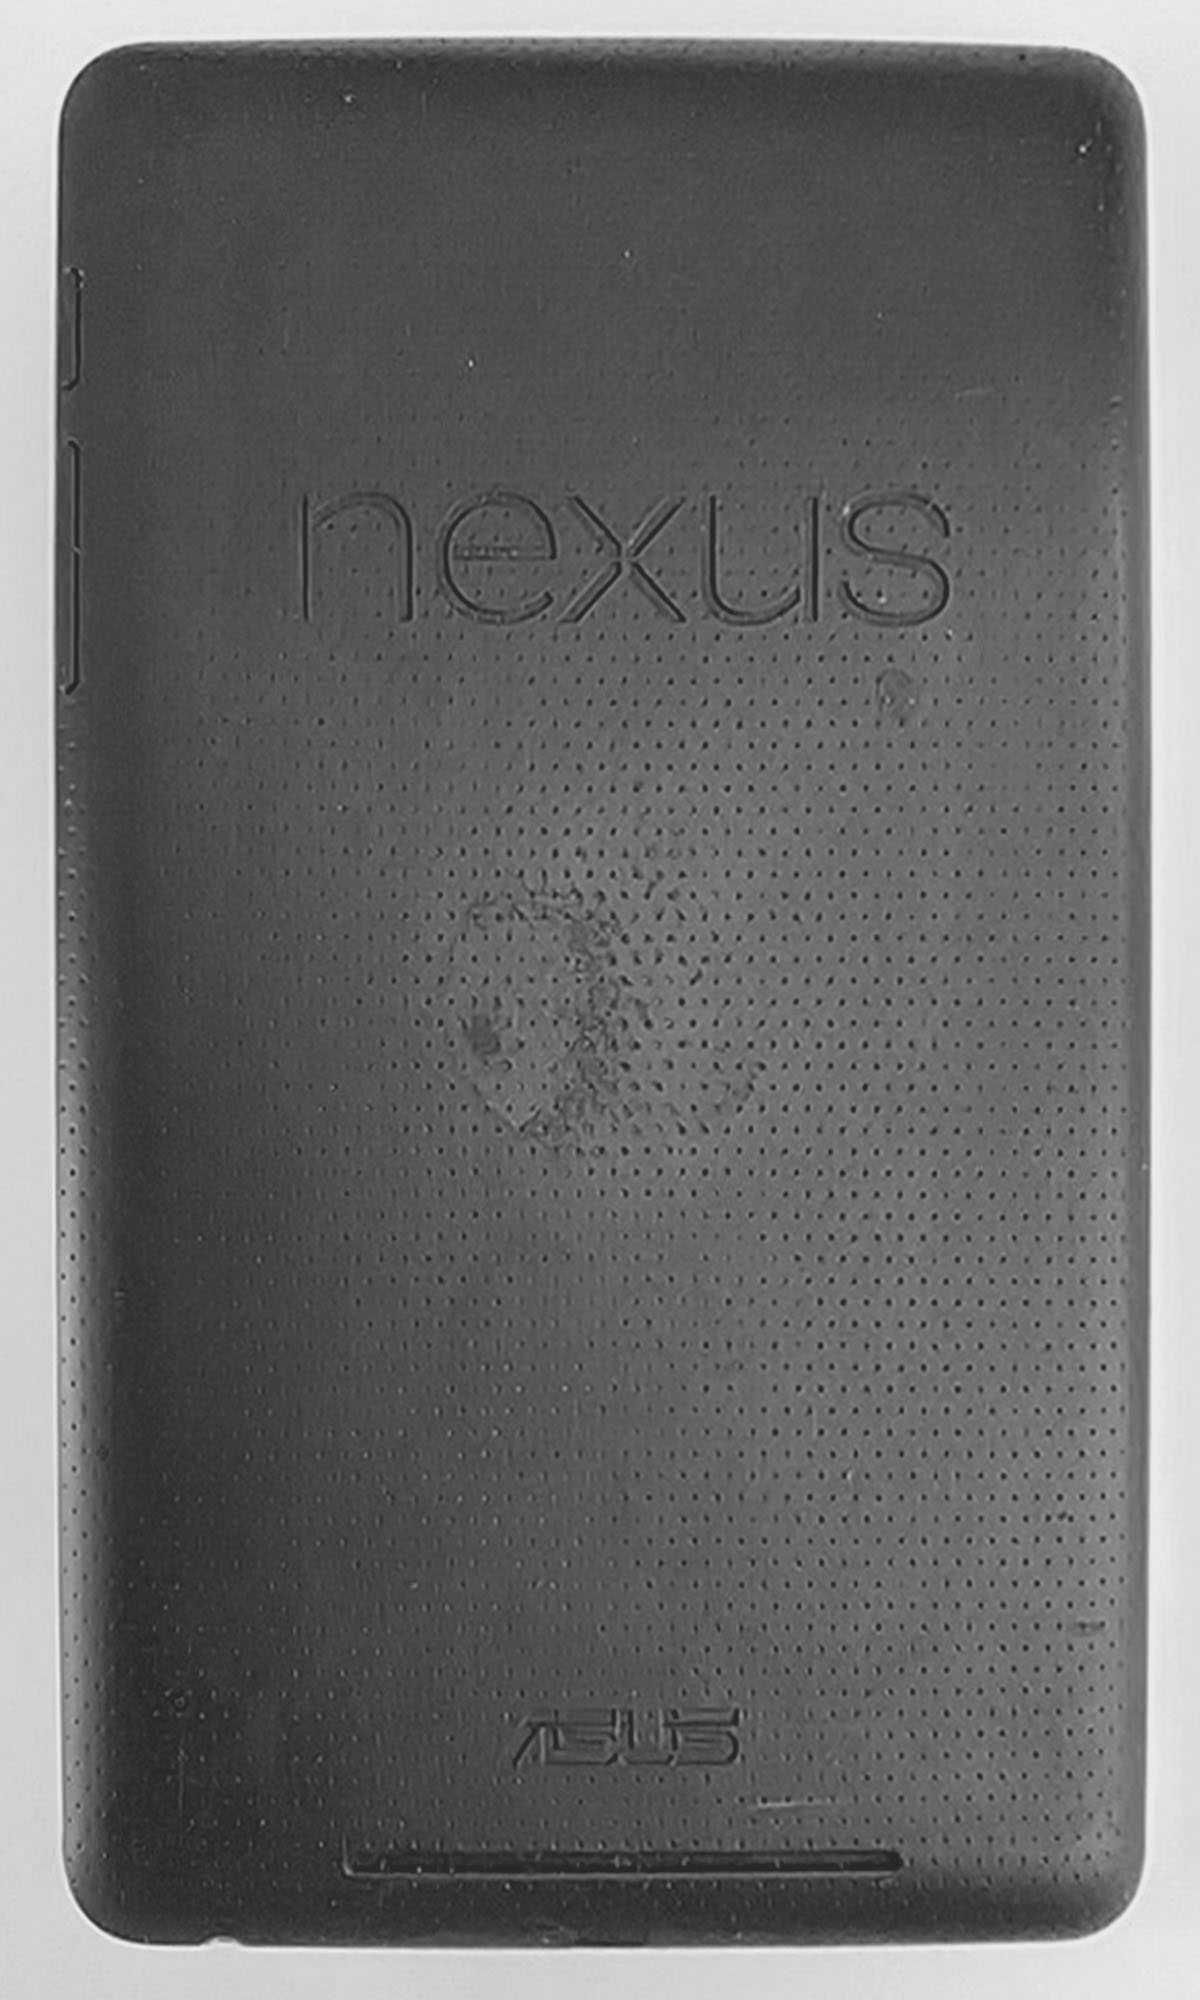 Планшетний комп'ютер Google Nexus 7 (2012) (ASUS Pad Me370T)